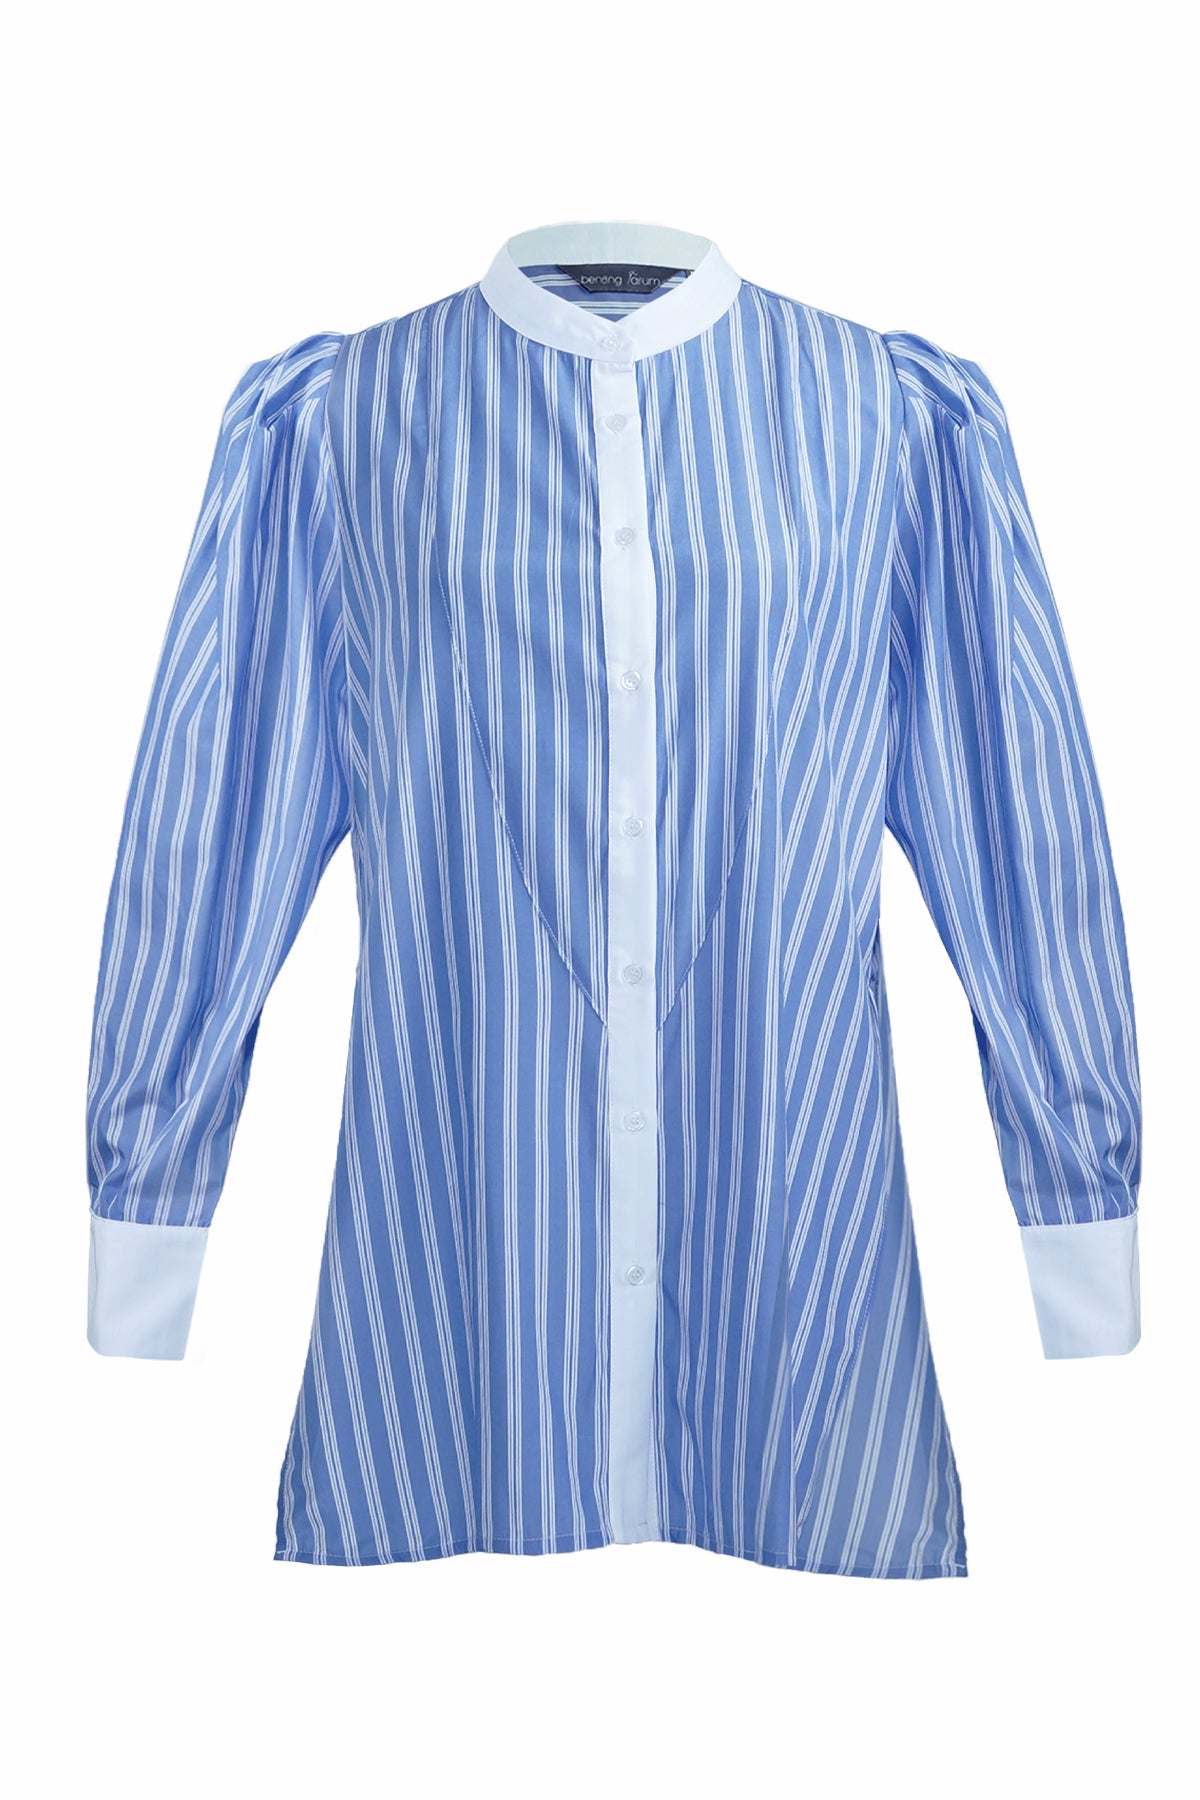 Double Striped Shirt - Ocean Blue